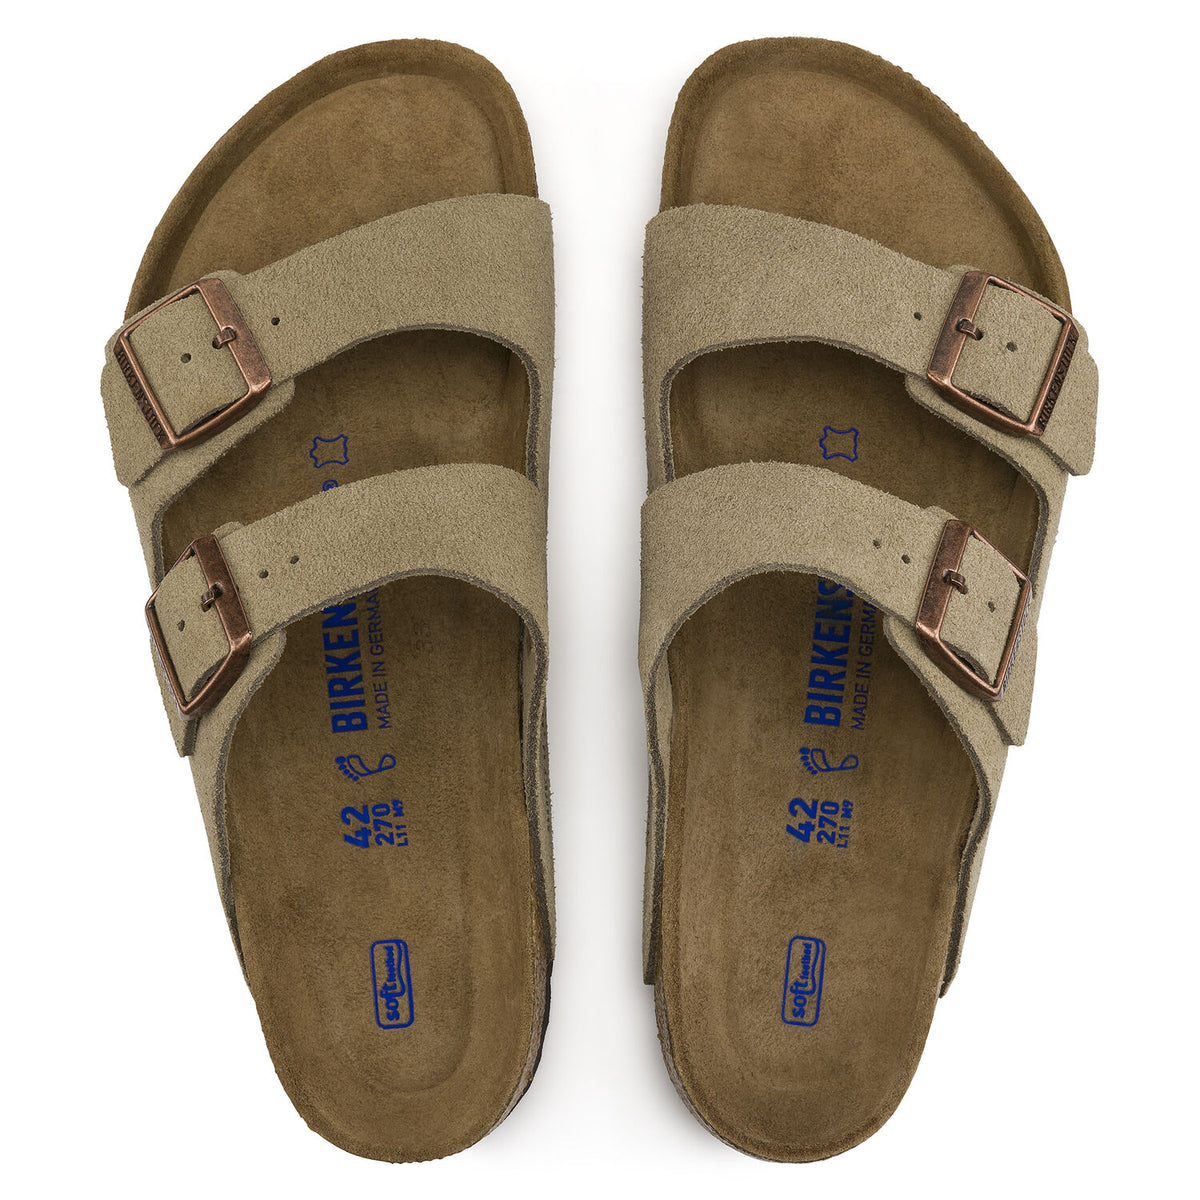 Arizona Suede Soft Footbed Narrow | Birkenstock | Comfort Plus Shoes | Comfort Plus &